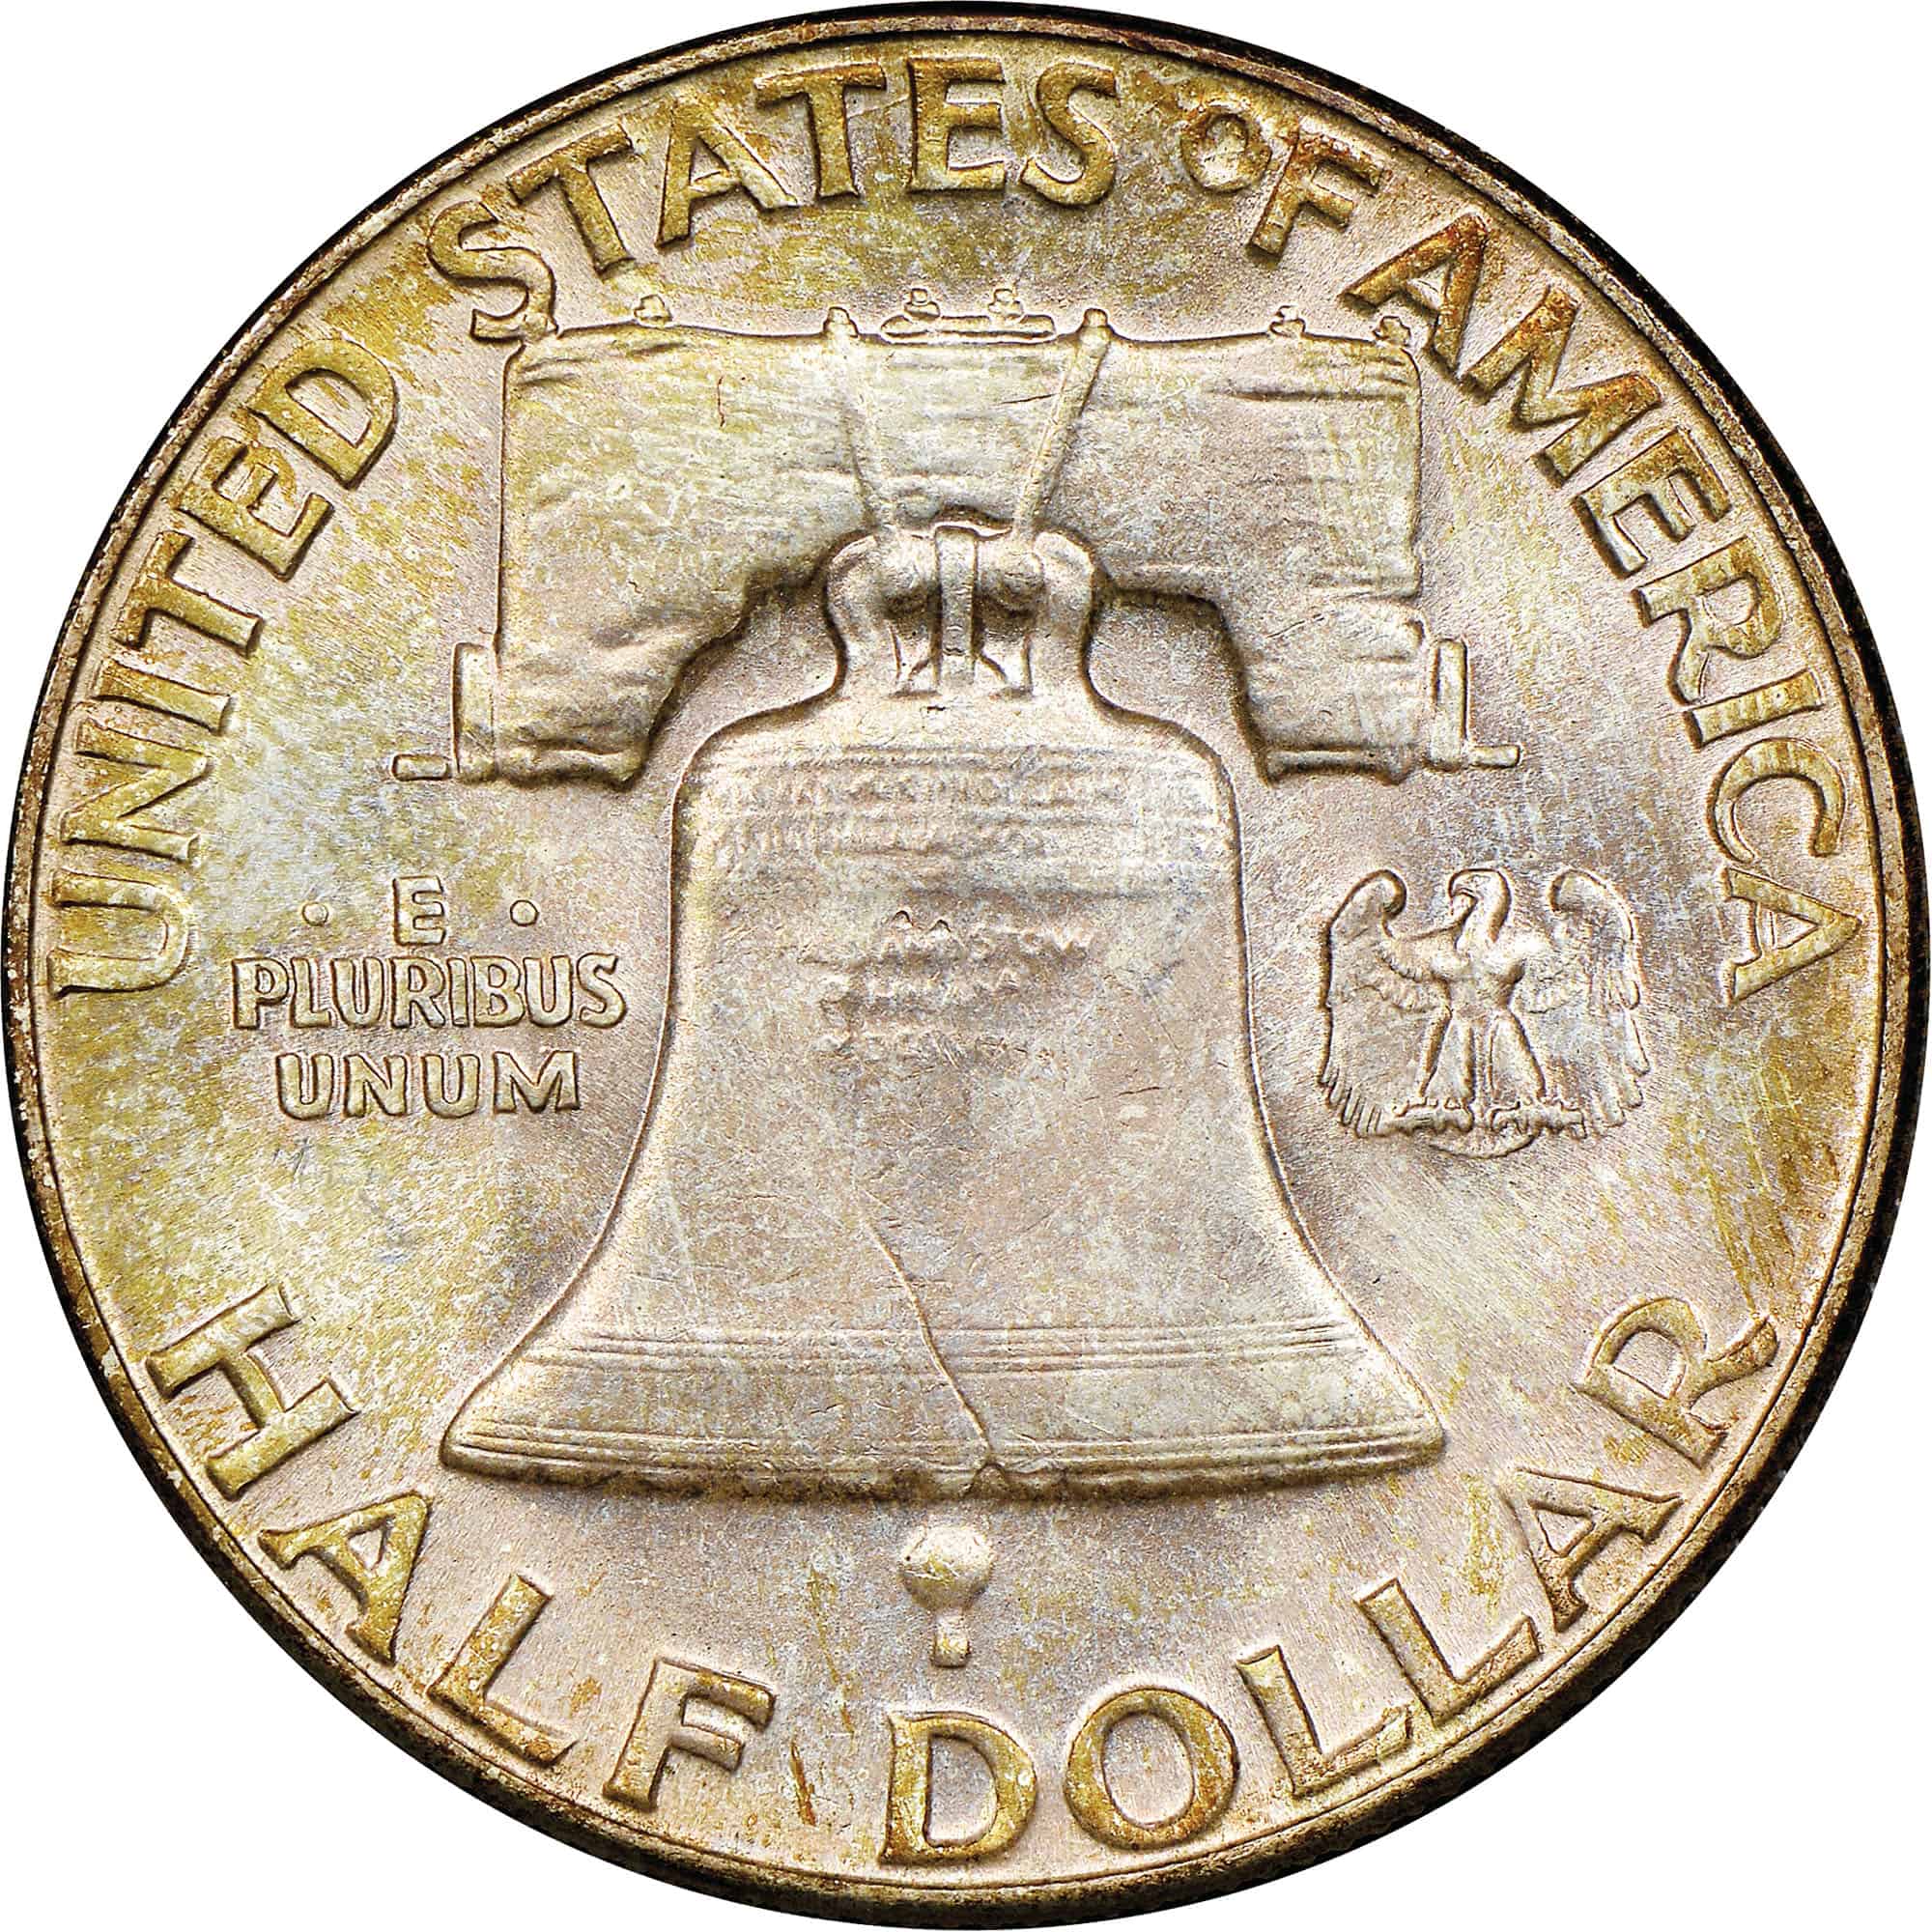 The 1952 Franklin half-dollar reverse